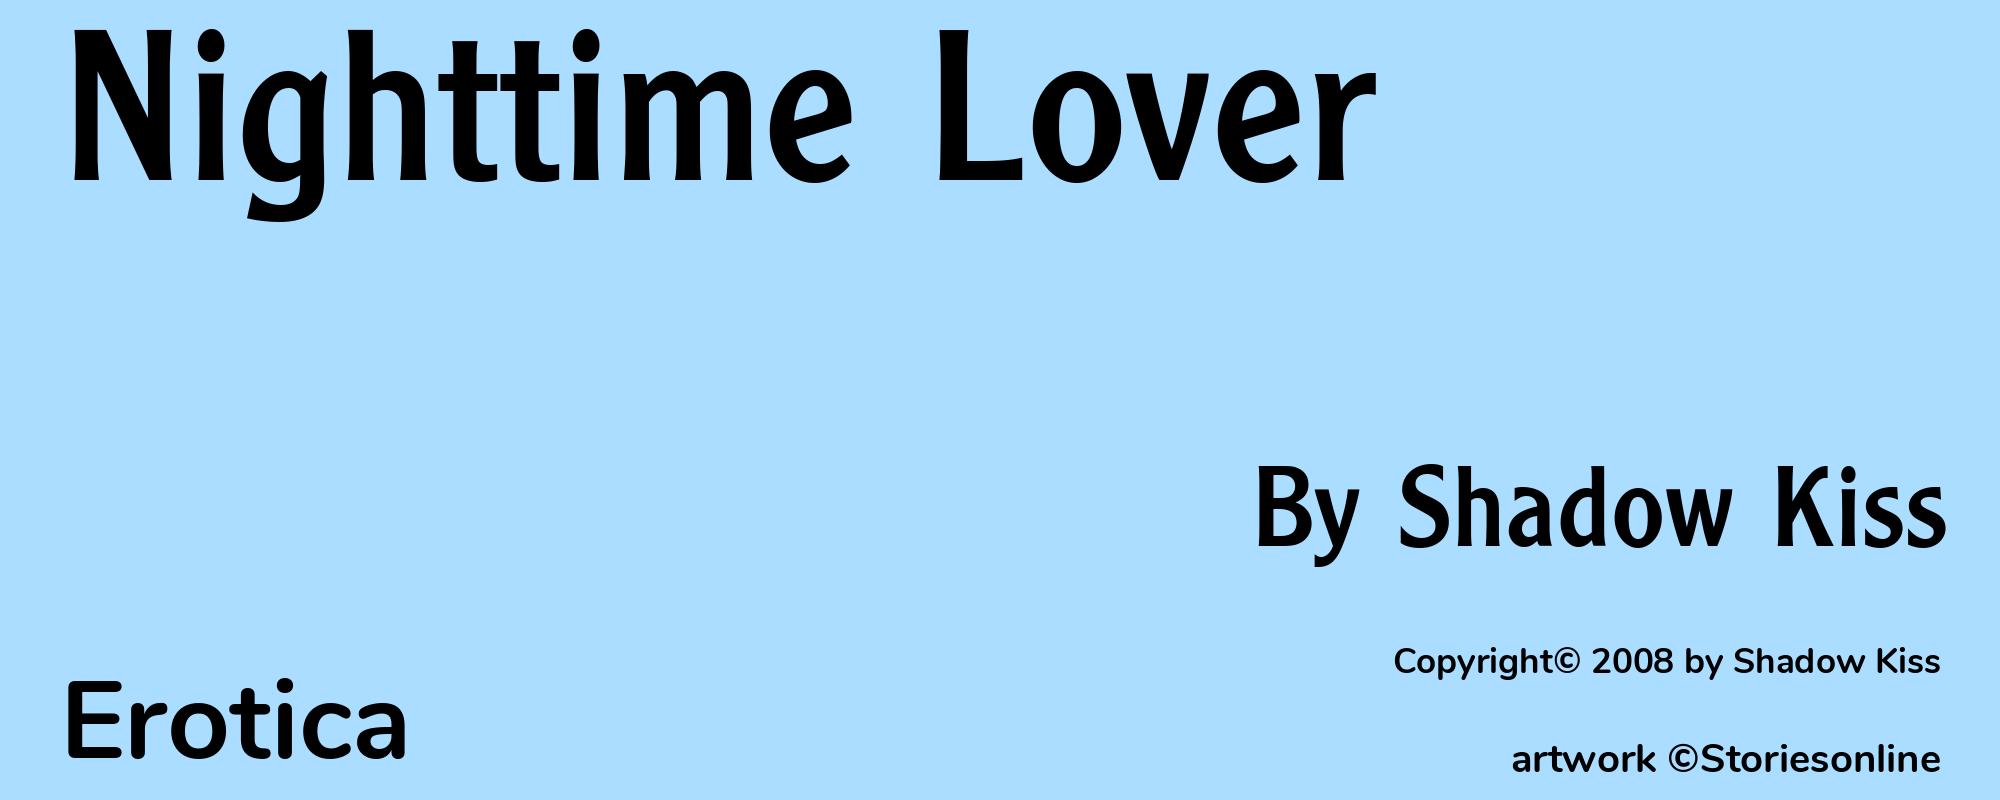 Nighttime Lover - Cover